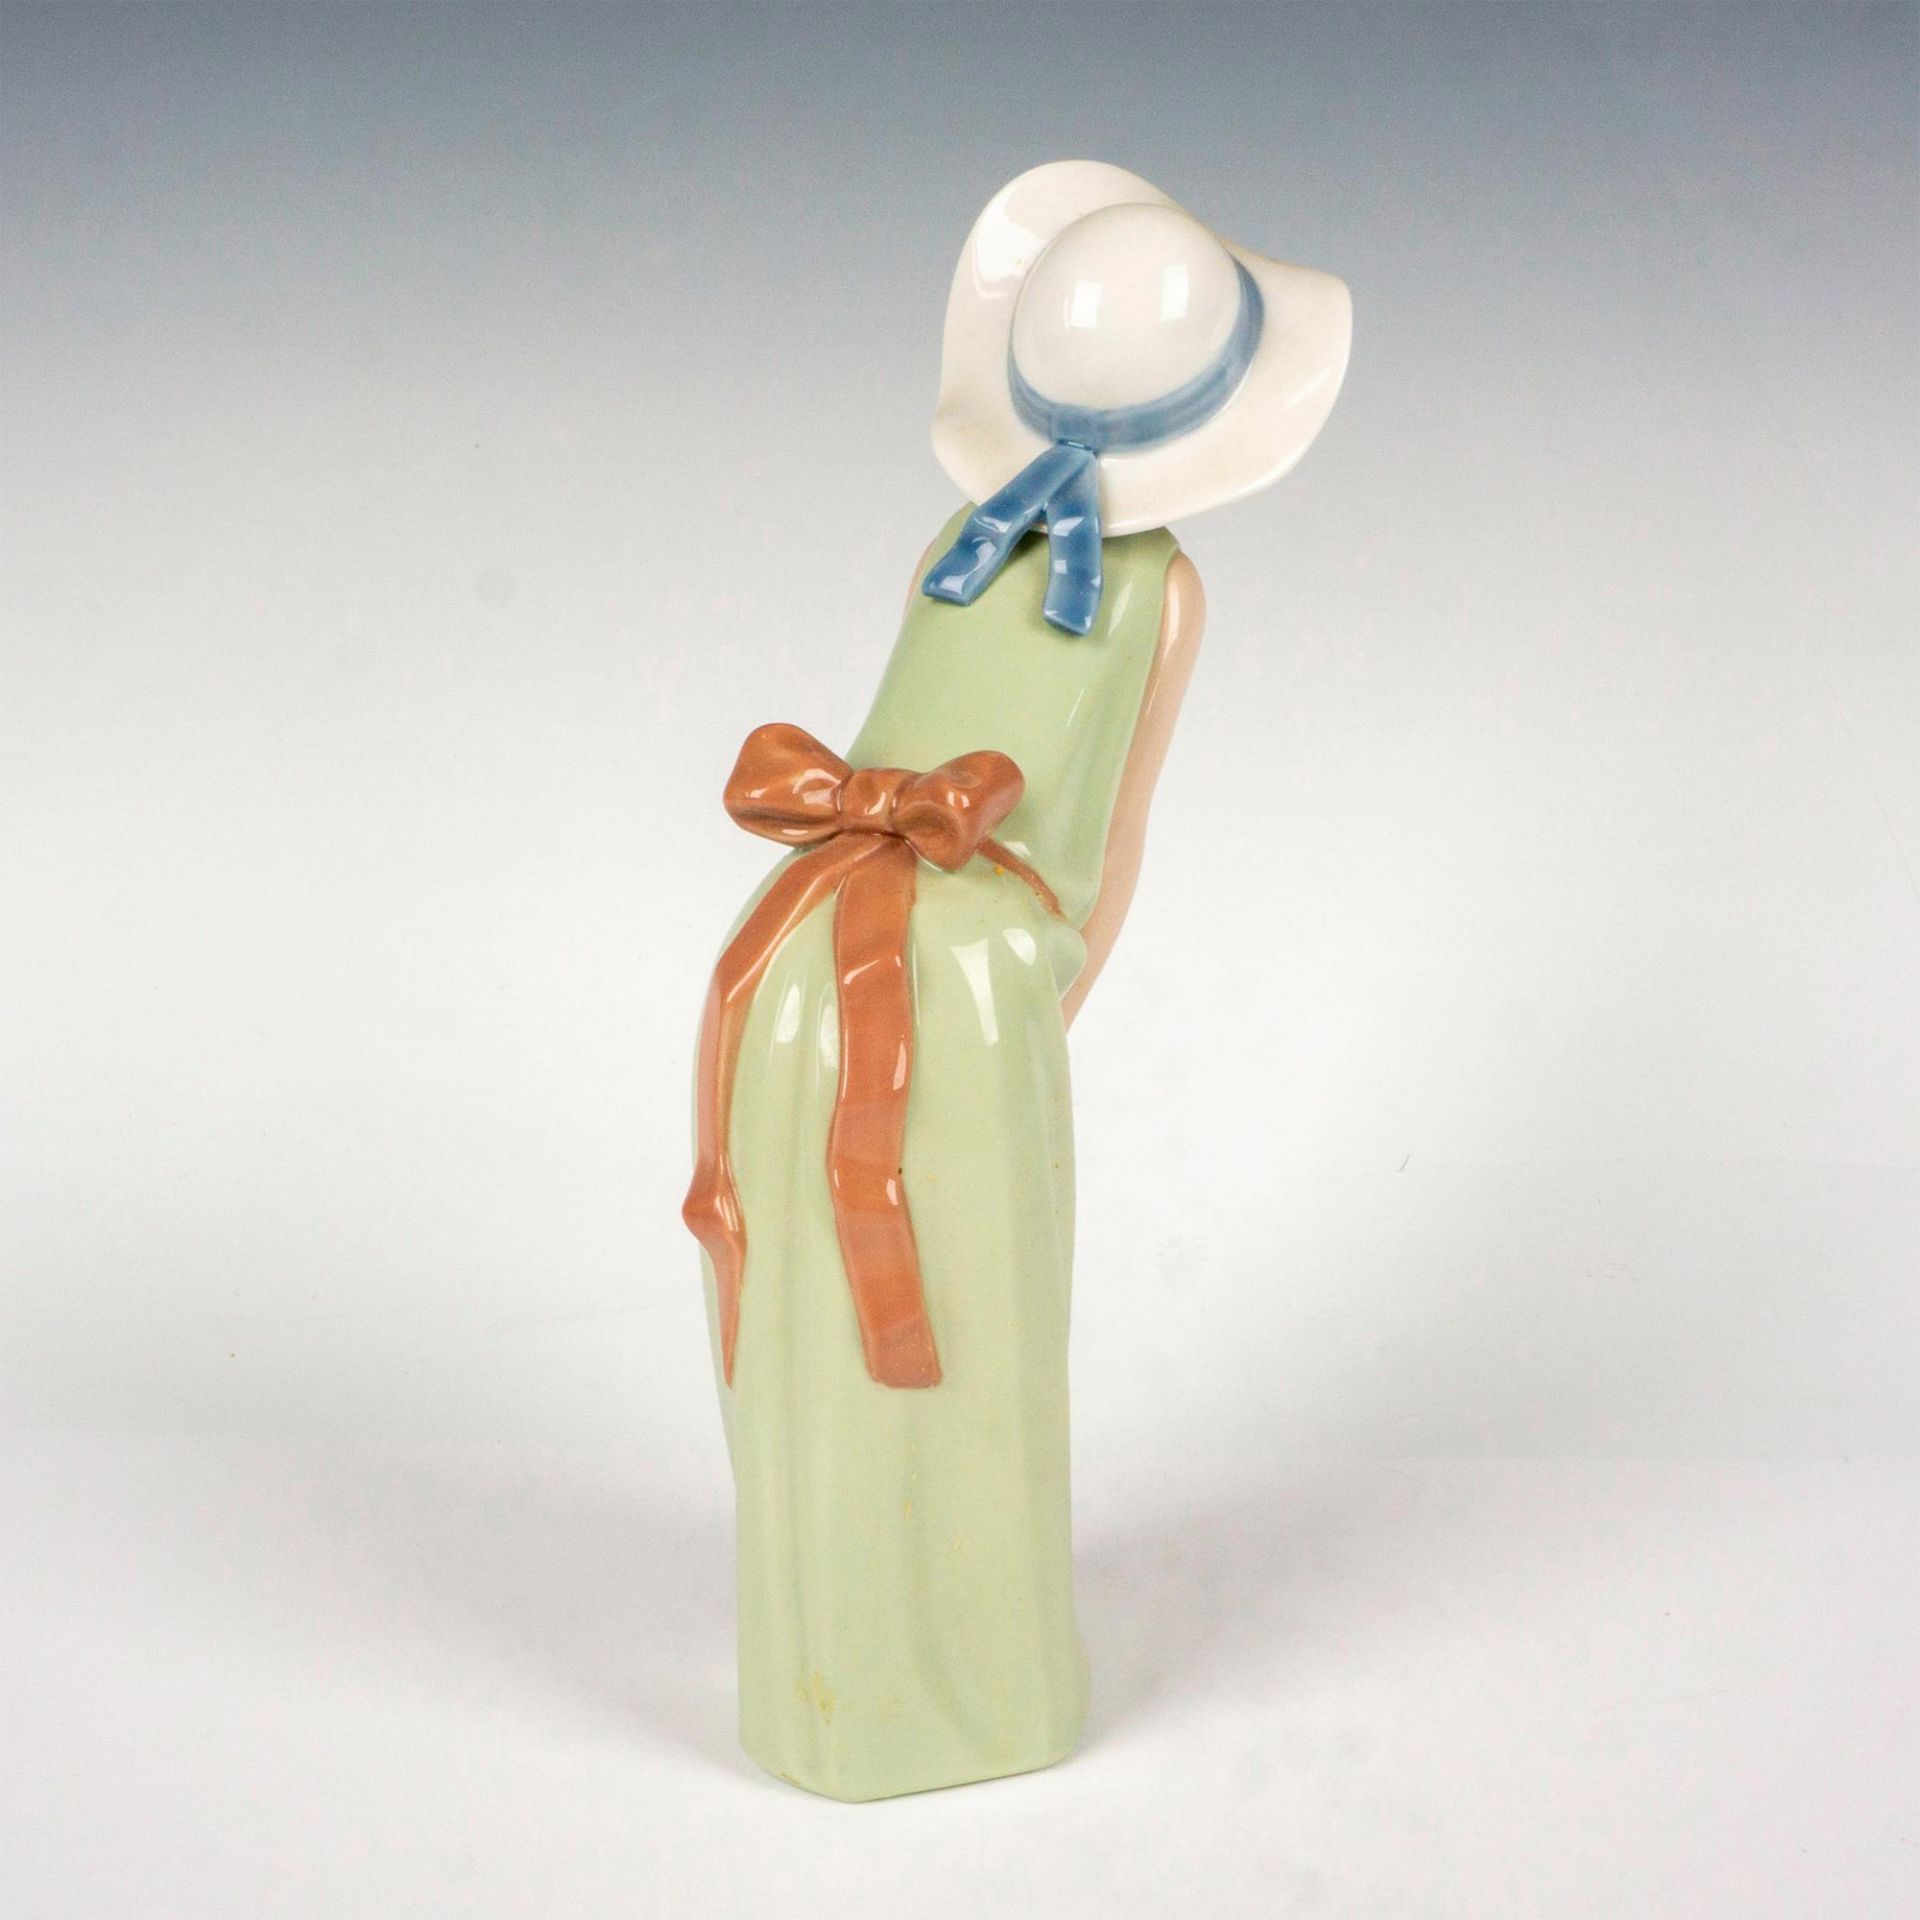 Curious 1005009 - Lladro Porcelain Figurine - Image 2 of 4